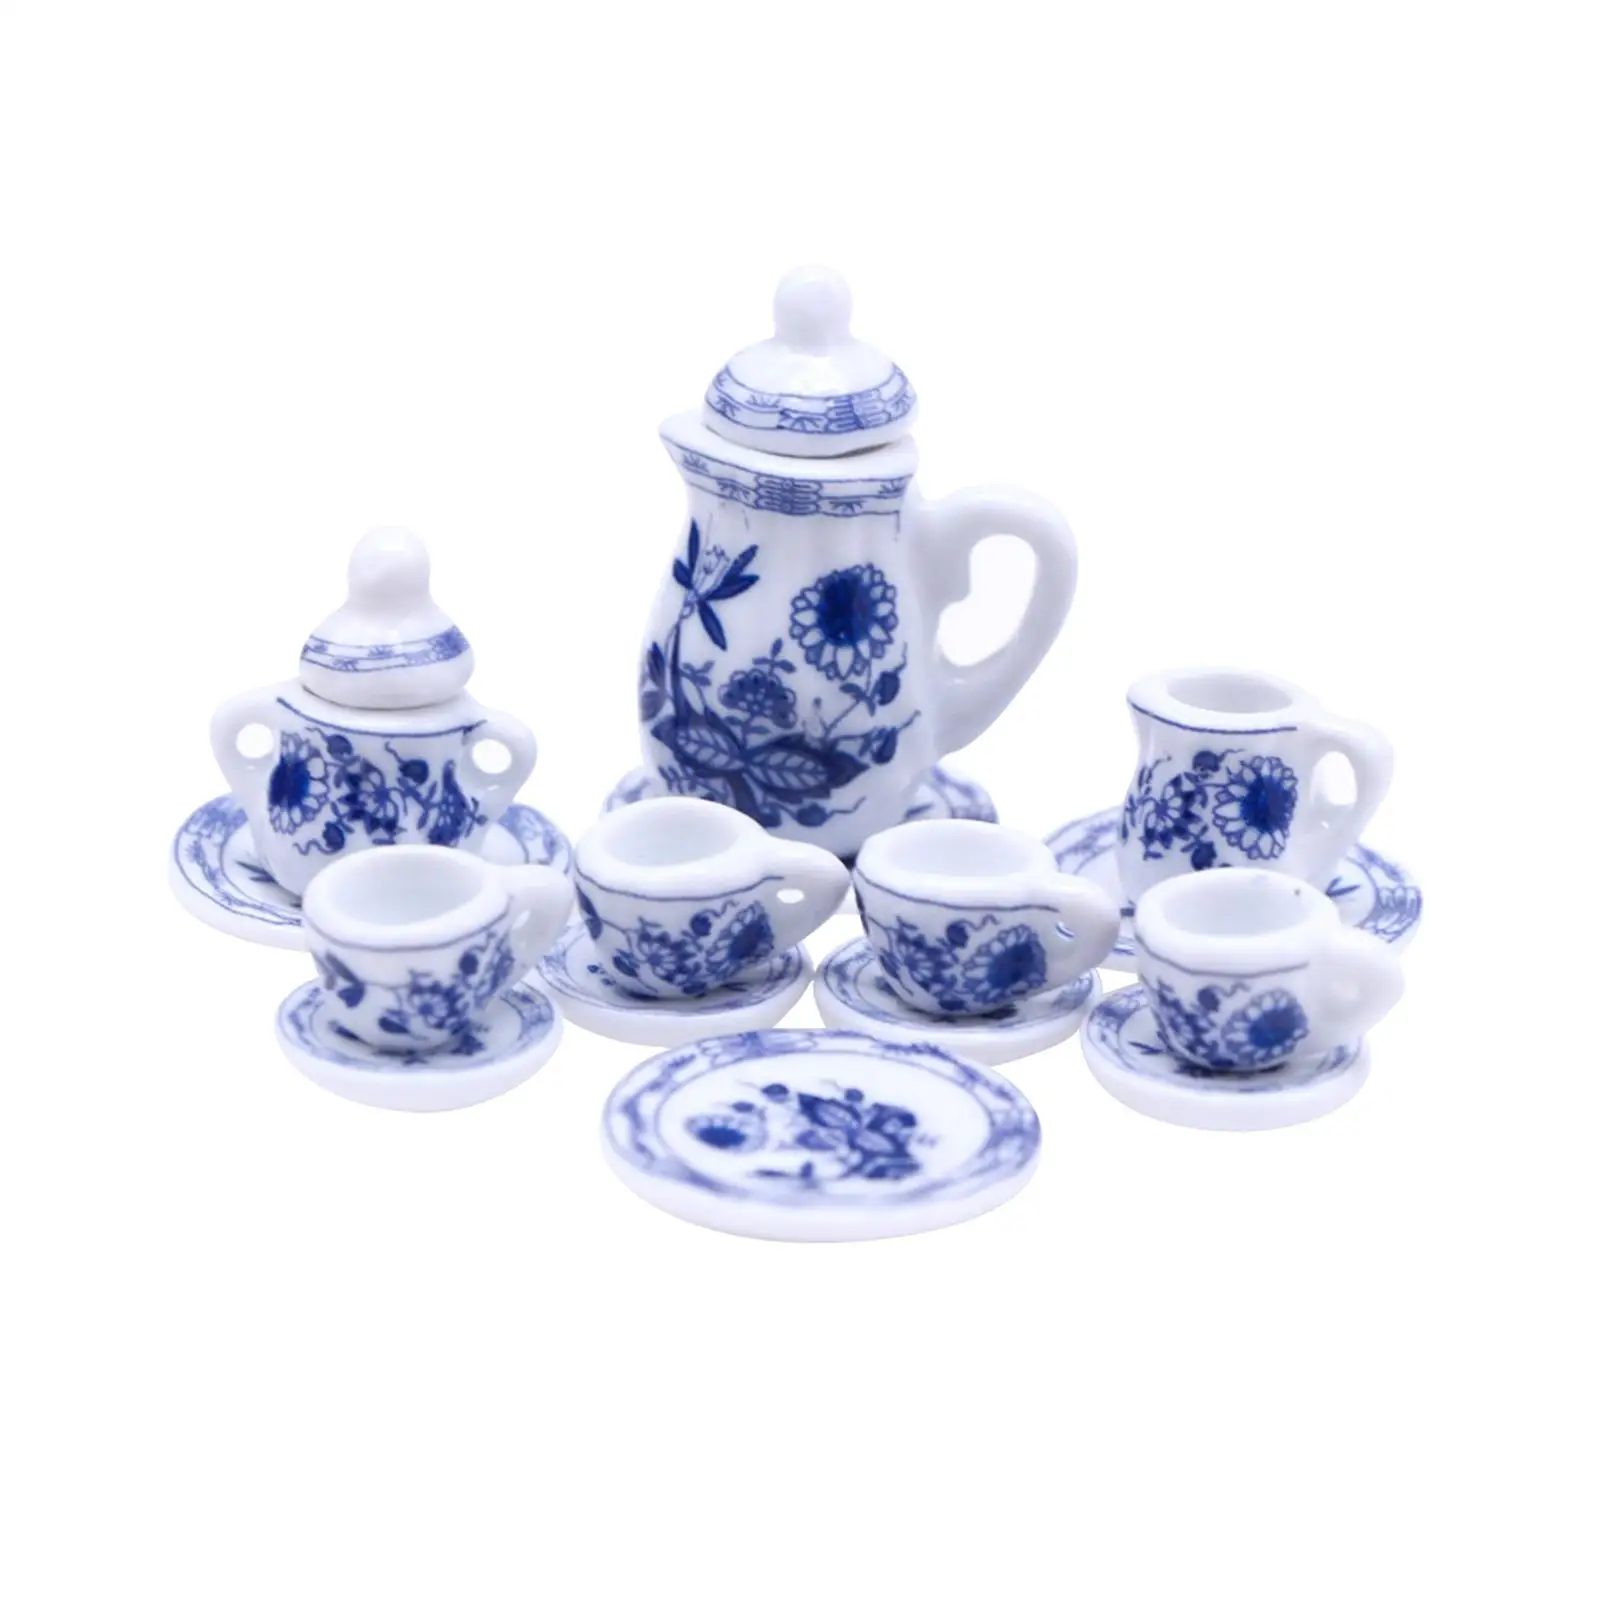 15x 1/12 Dollhouse Miniature Teapot Cup Tea Set Miniature Set for Kitchen